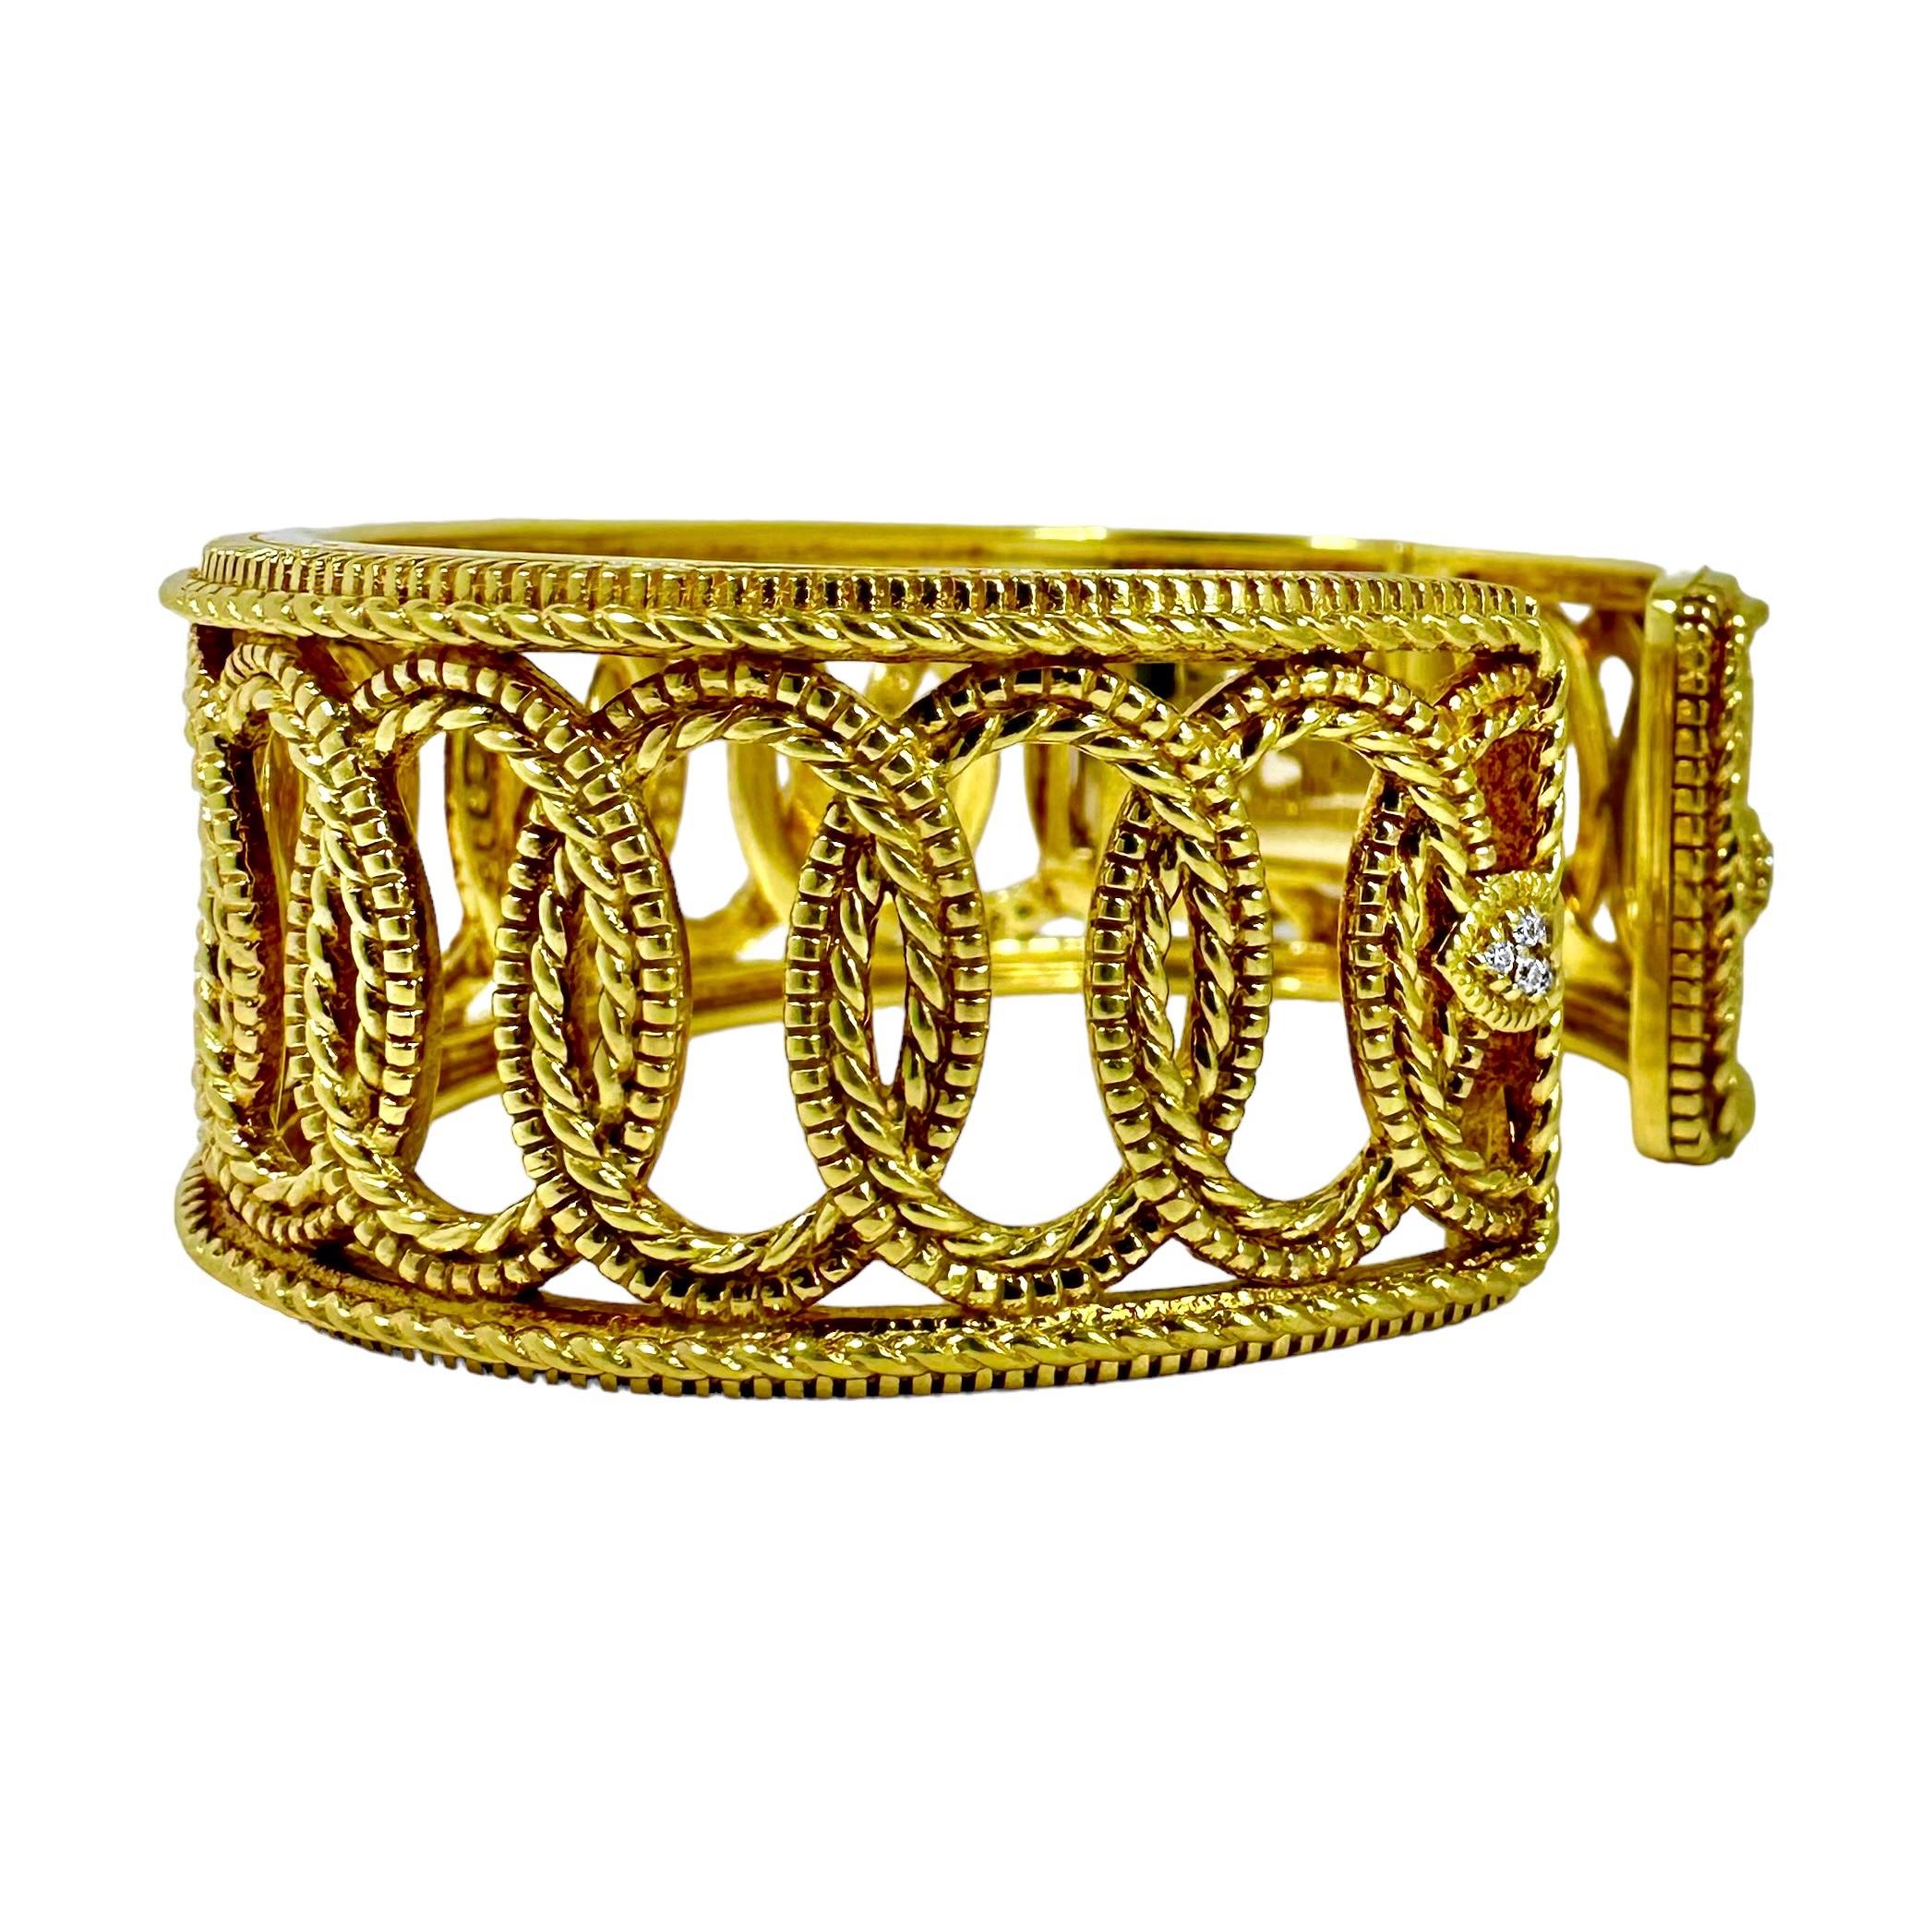 Brilliant Cut Casual Judith Ripka 18k Gold Hinged, Cuff Bracelet with Diamonds 7/8 inch Wide 